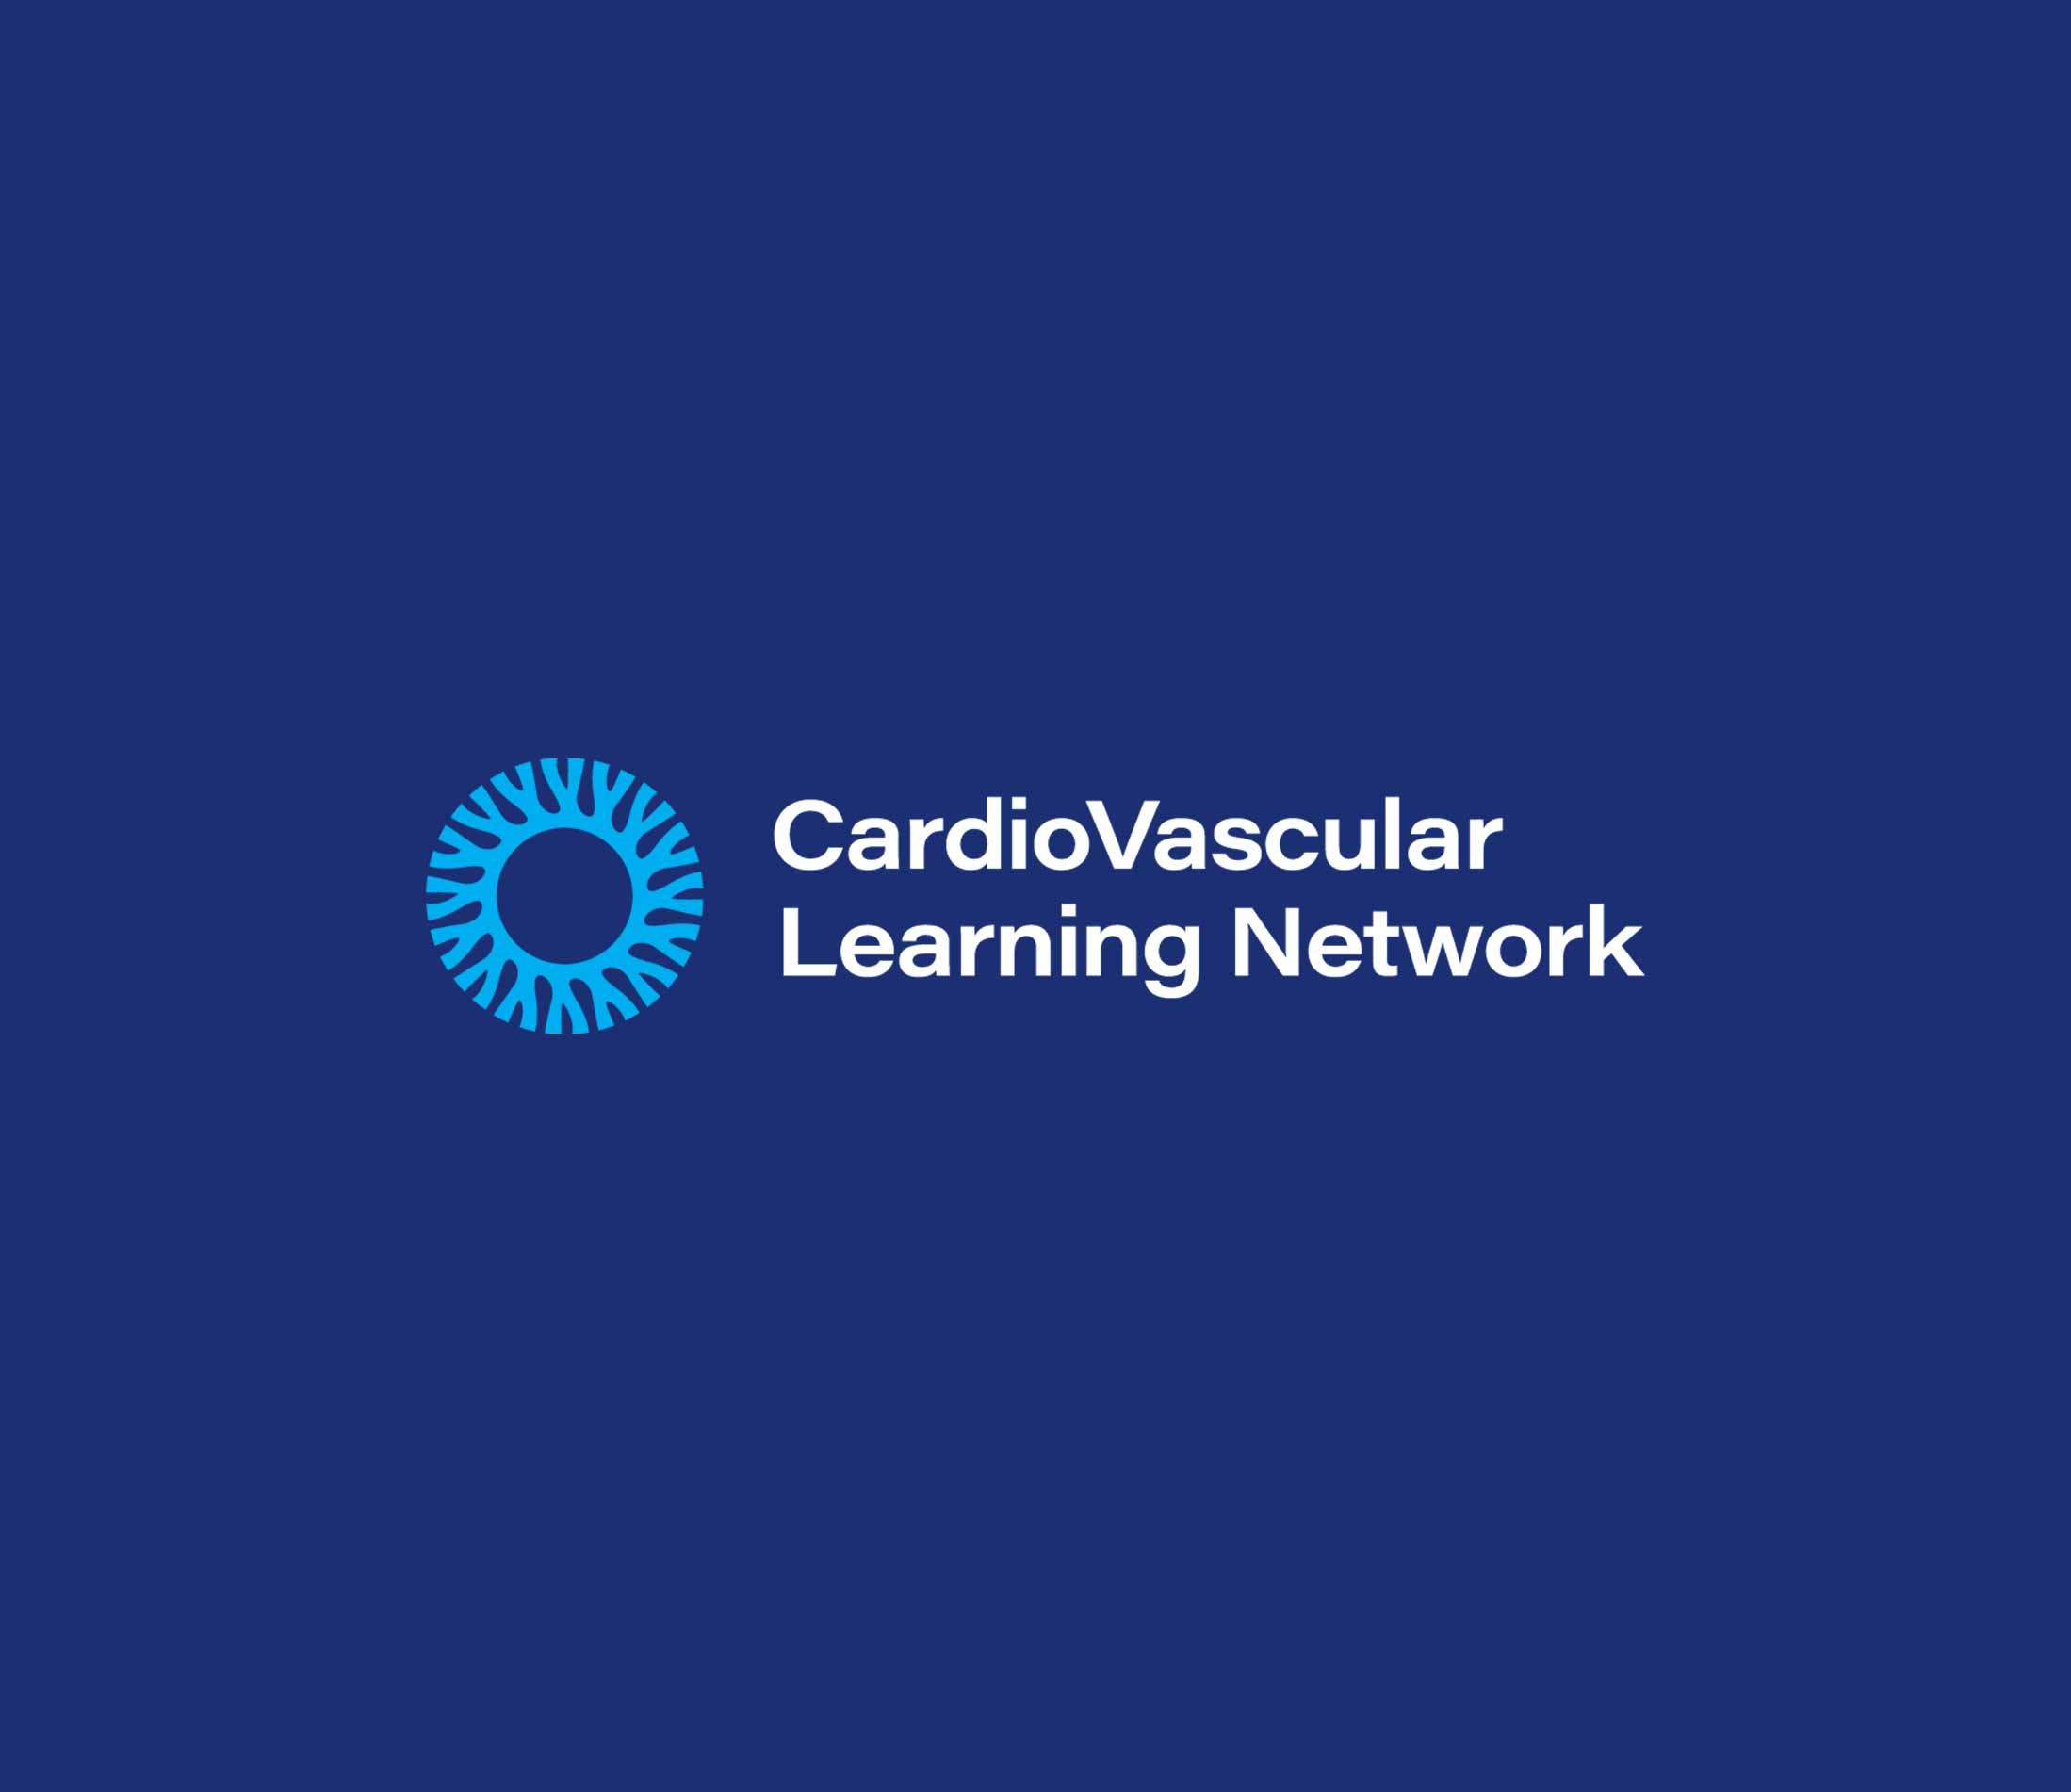 Cardiovascular Learning Network